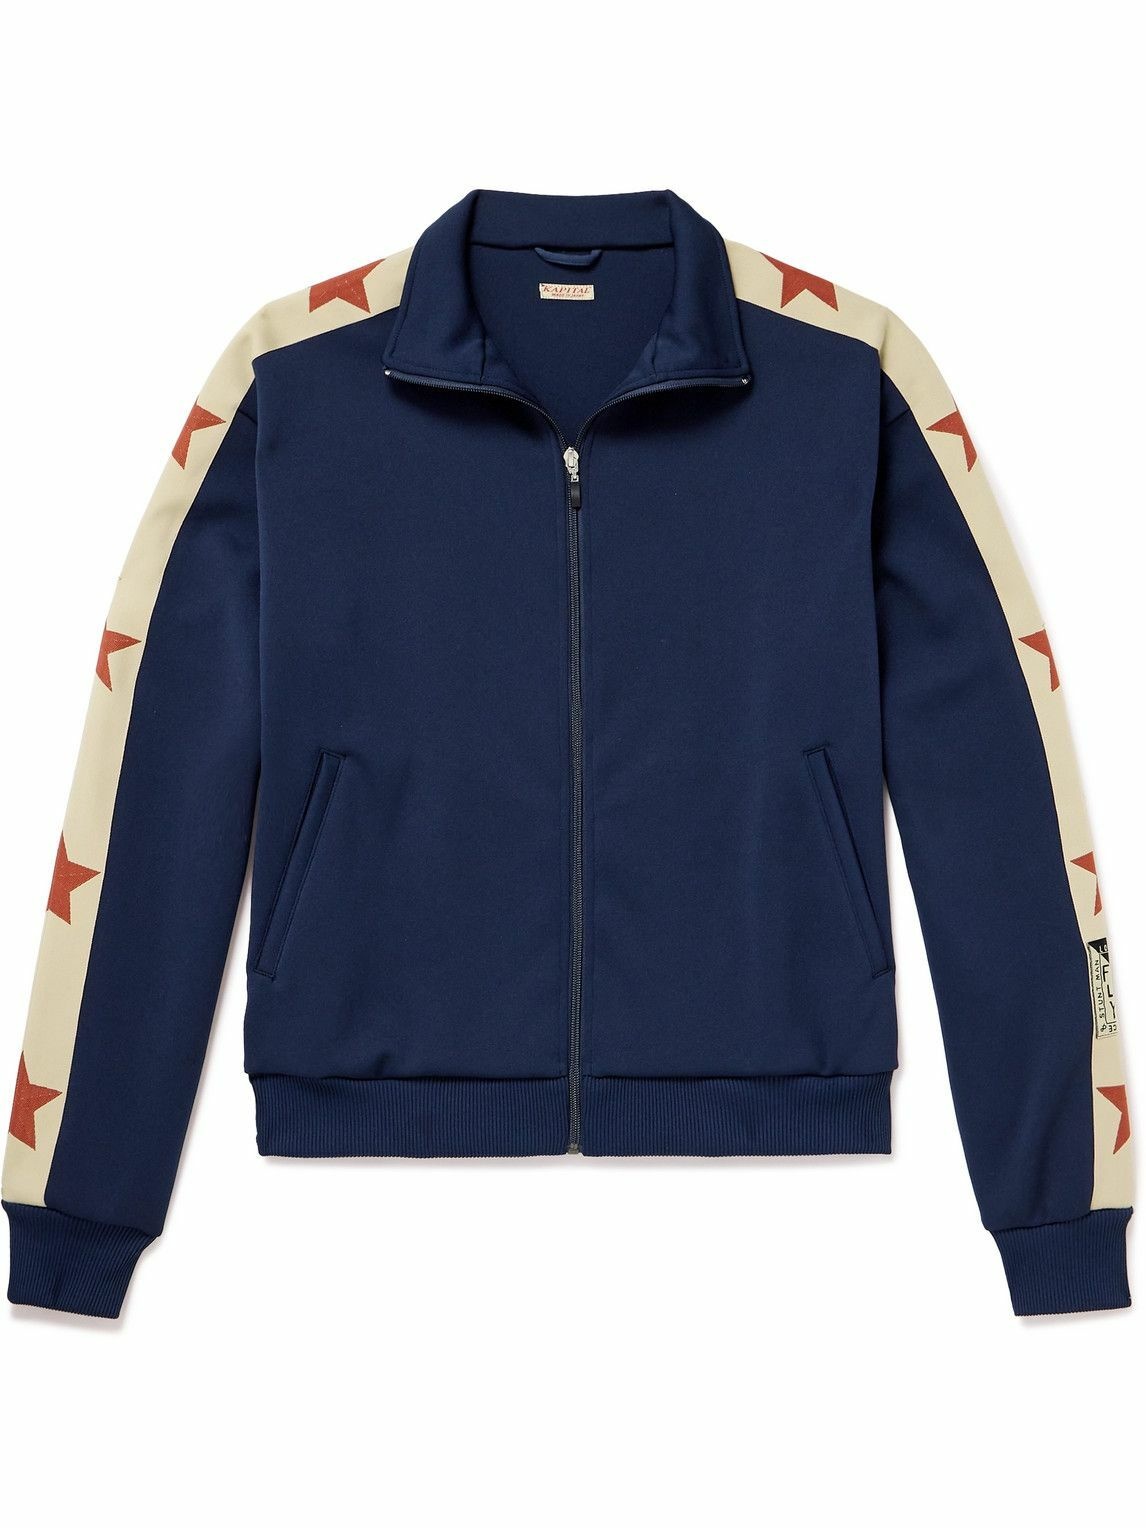 KAPITAL - Webbing-Trimmed Jersey Track Jacket - Blue KAPITAL